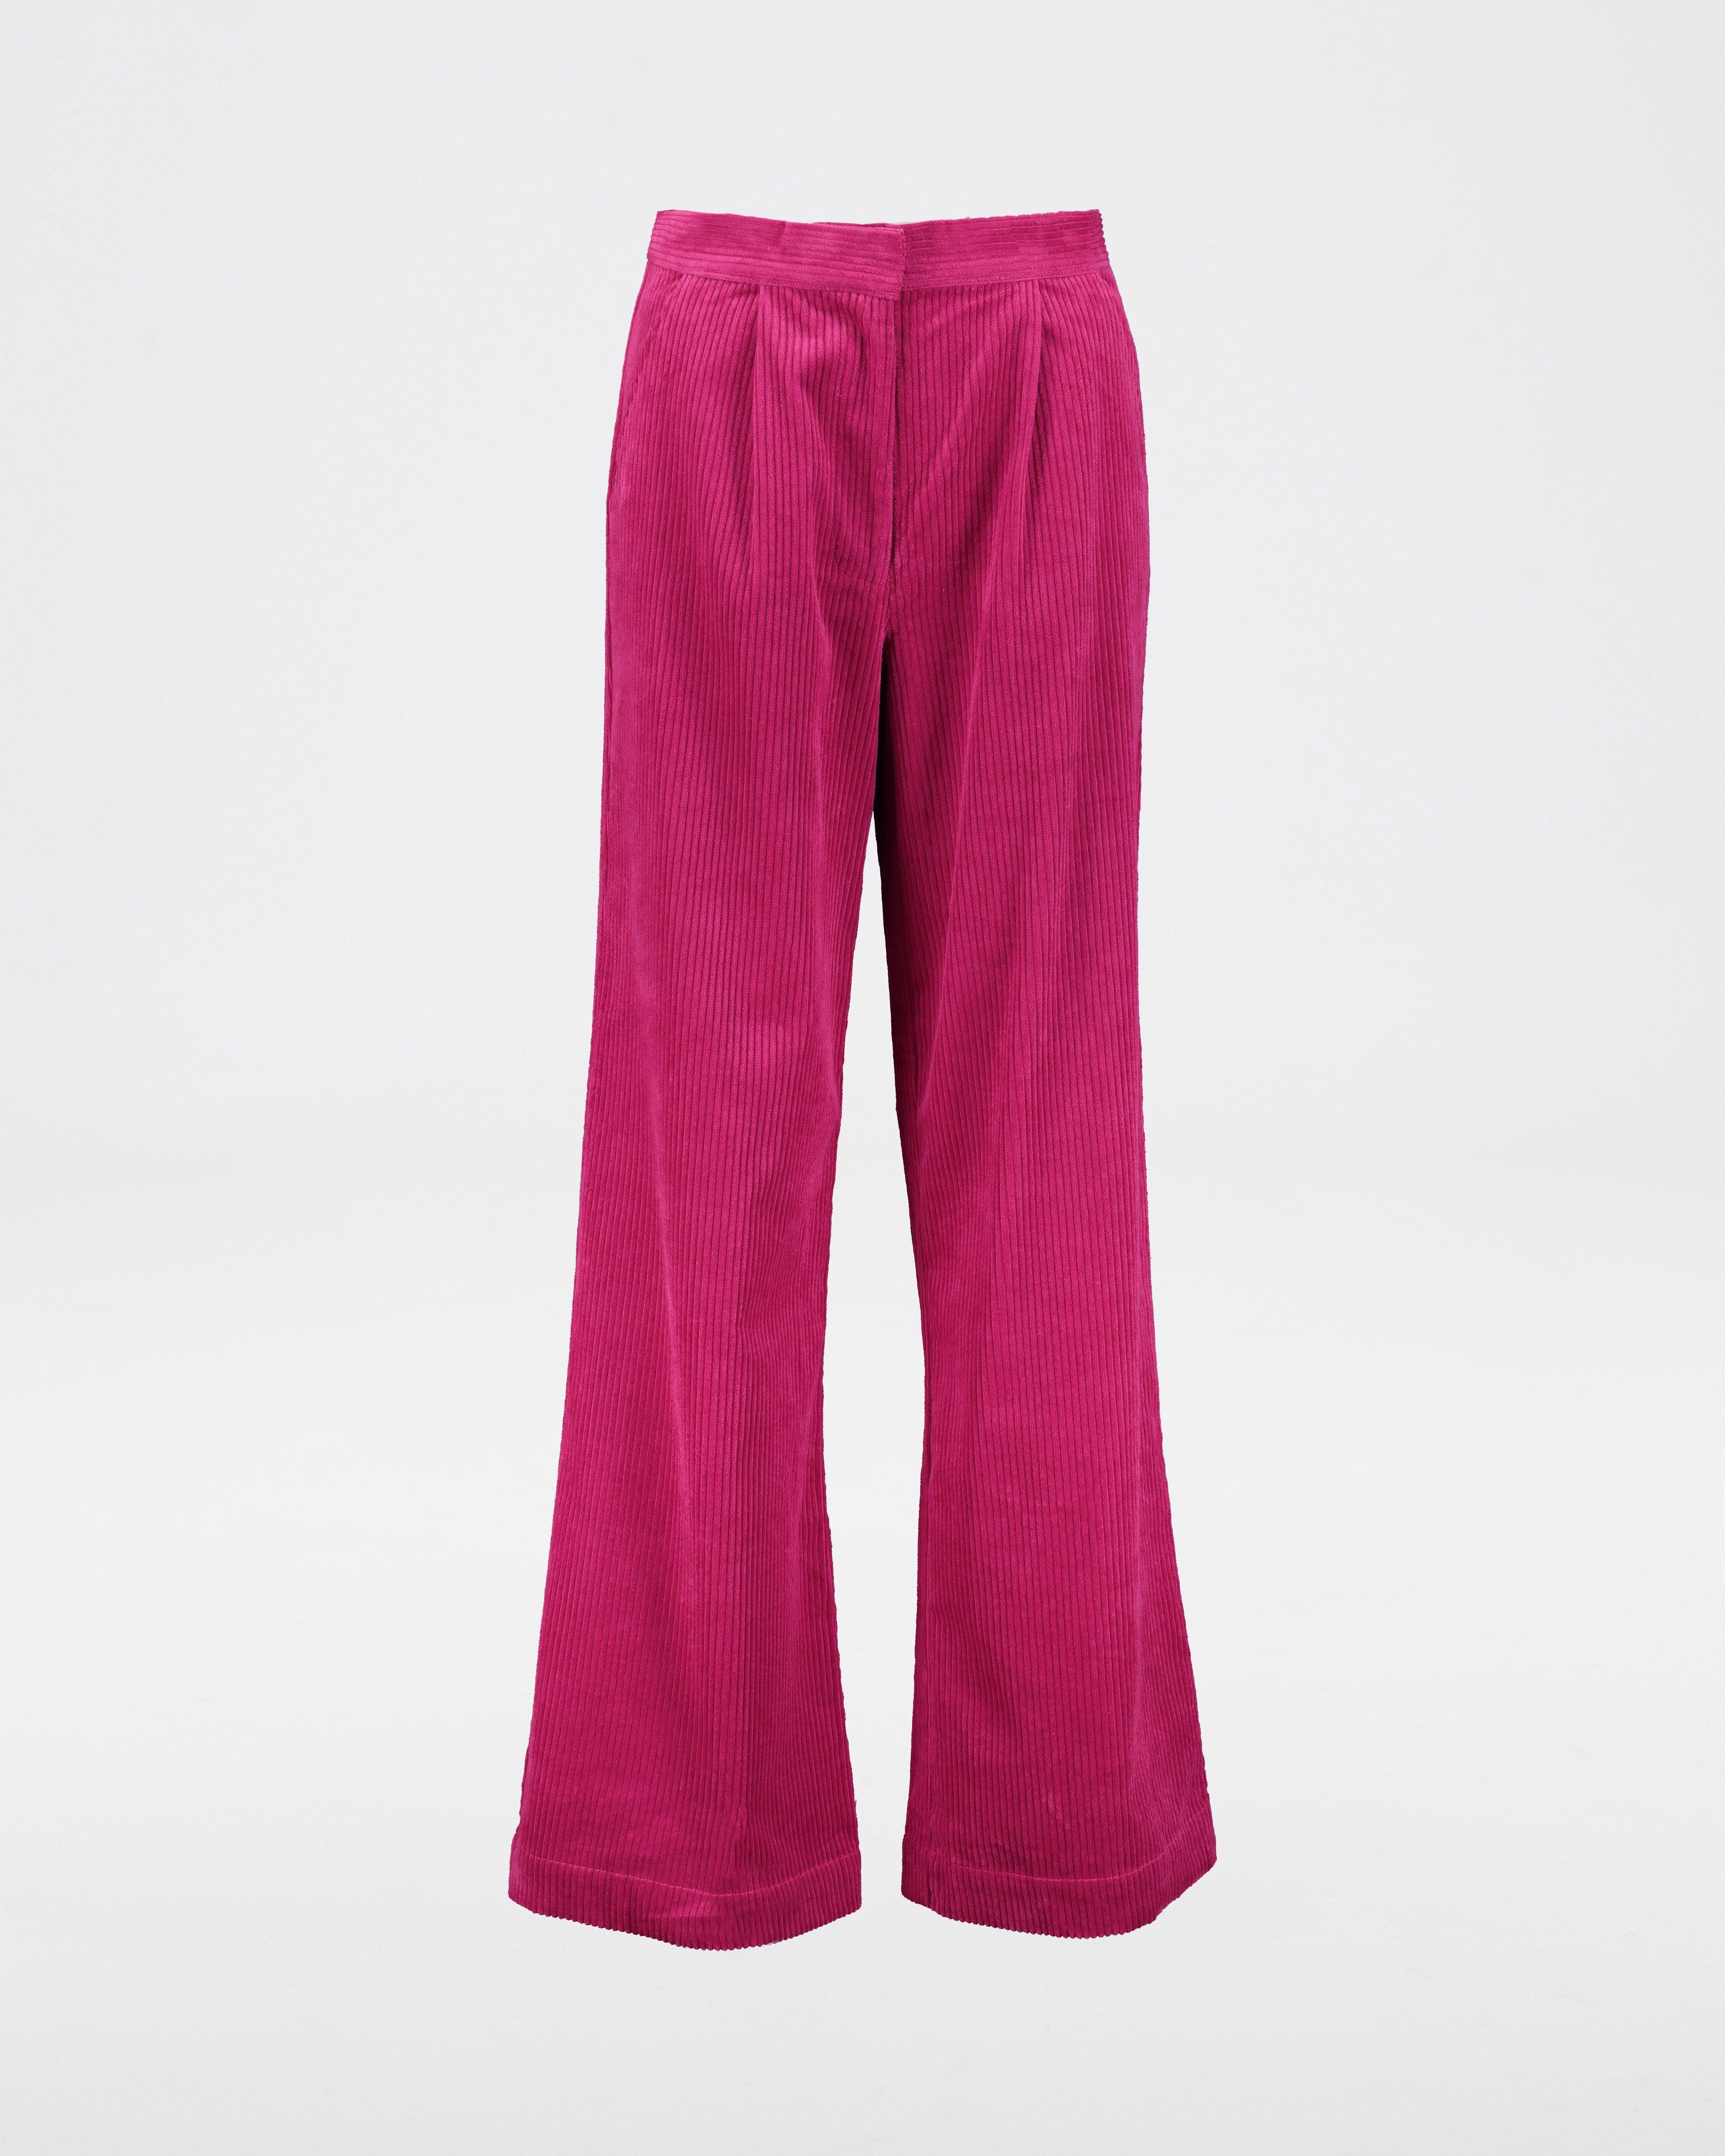 Teagan Cord Pant -  Pink